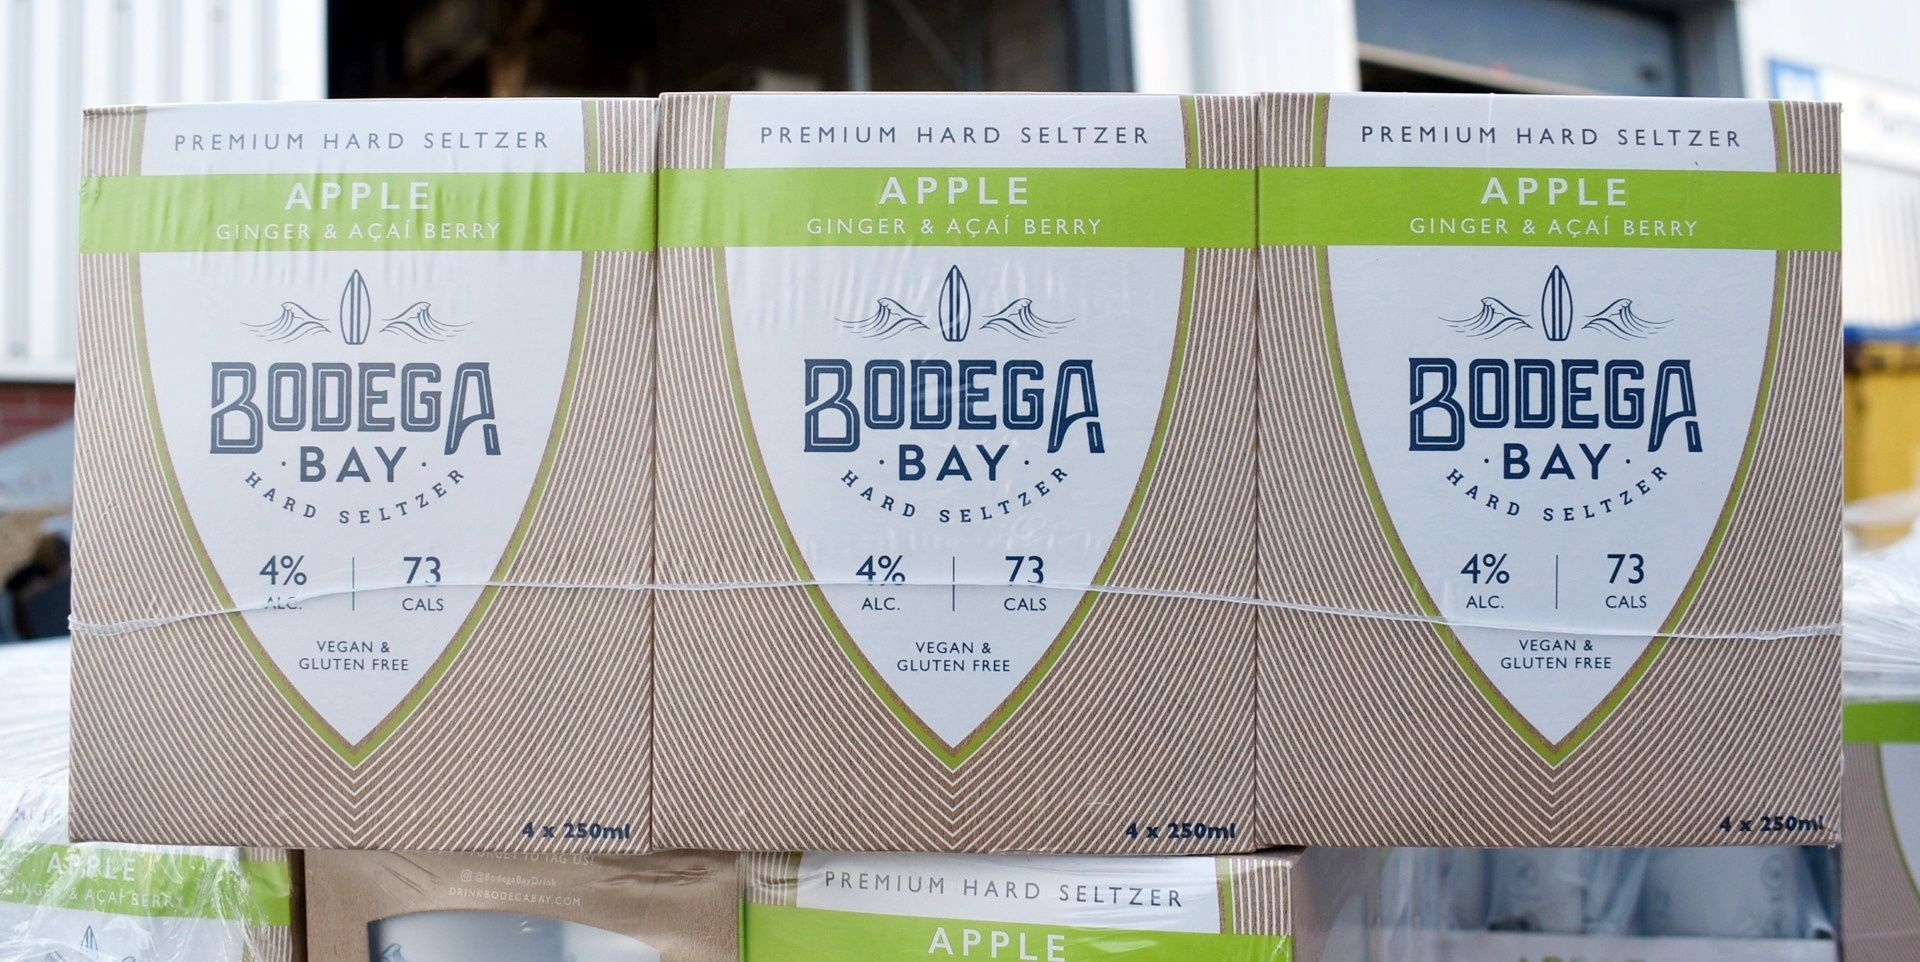 24 x Bodega Bay Hard Seltzer 250ml Alcoholic Sparkling Water Drinks - Apple Ginger & Acai Berry - Image 2 of 11